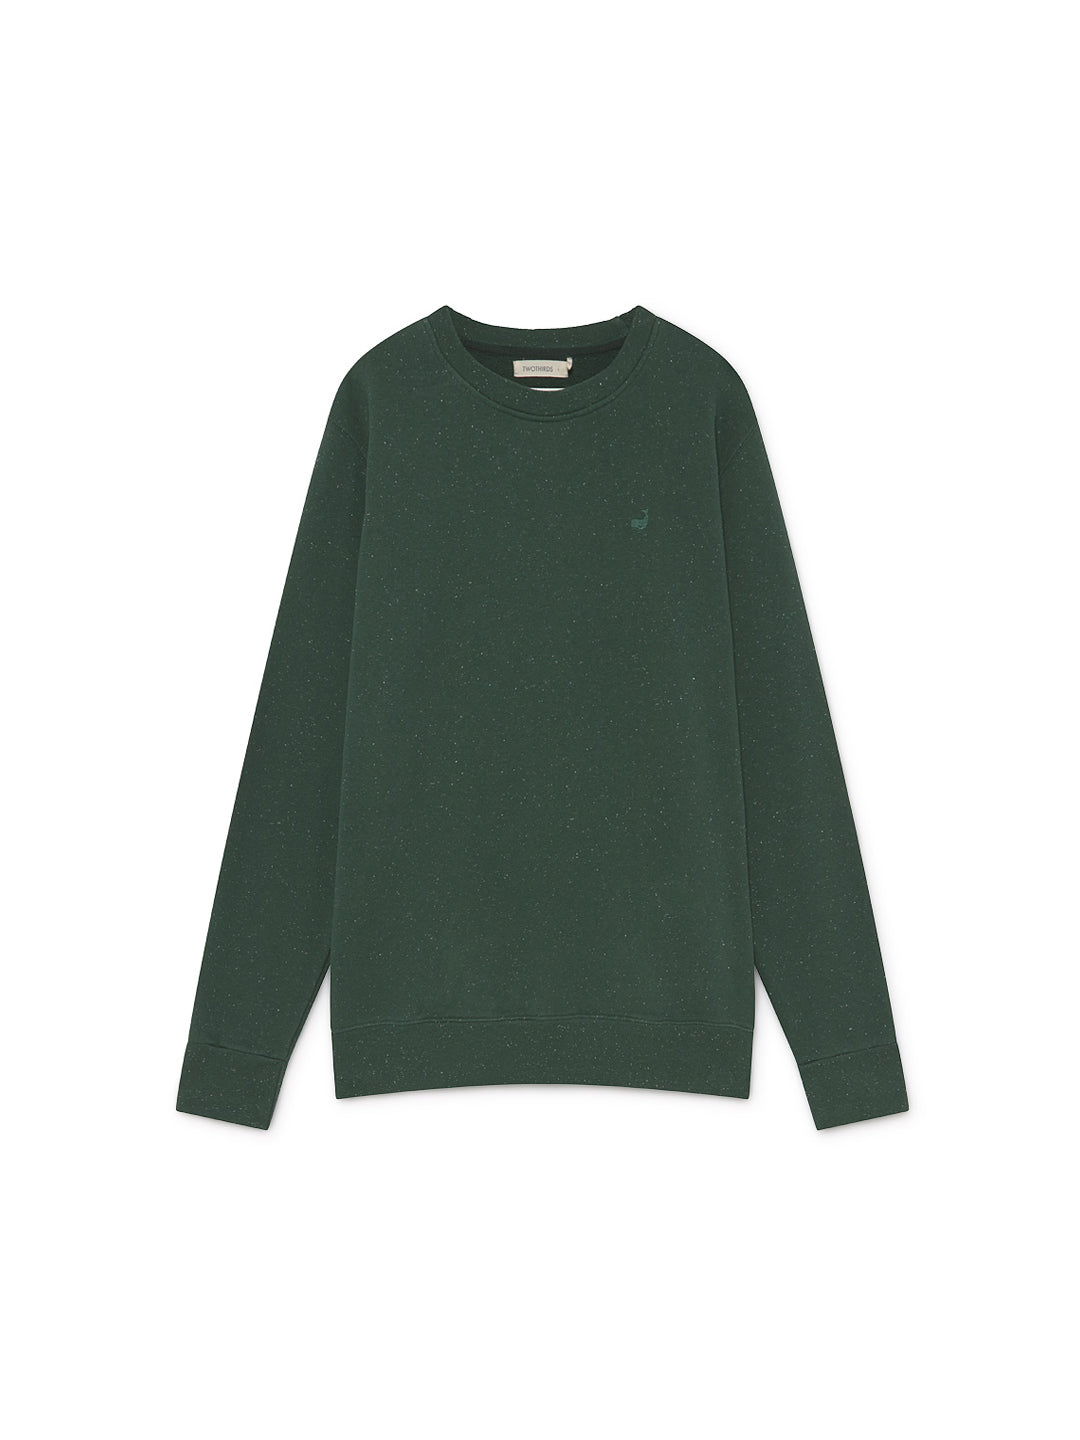 Sepanggar Man Sweatshirt - Dark Green